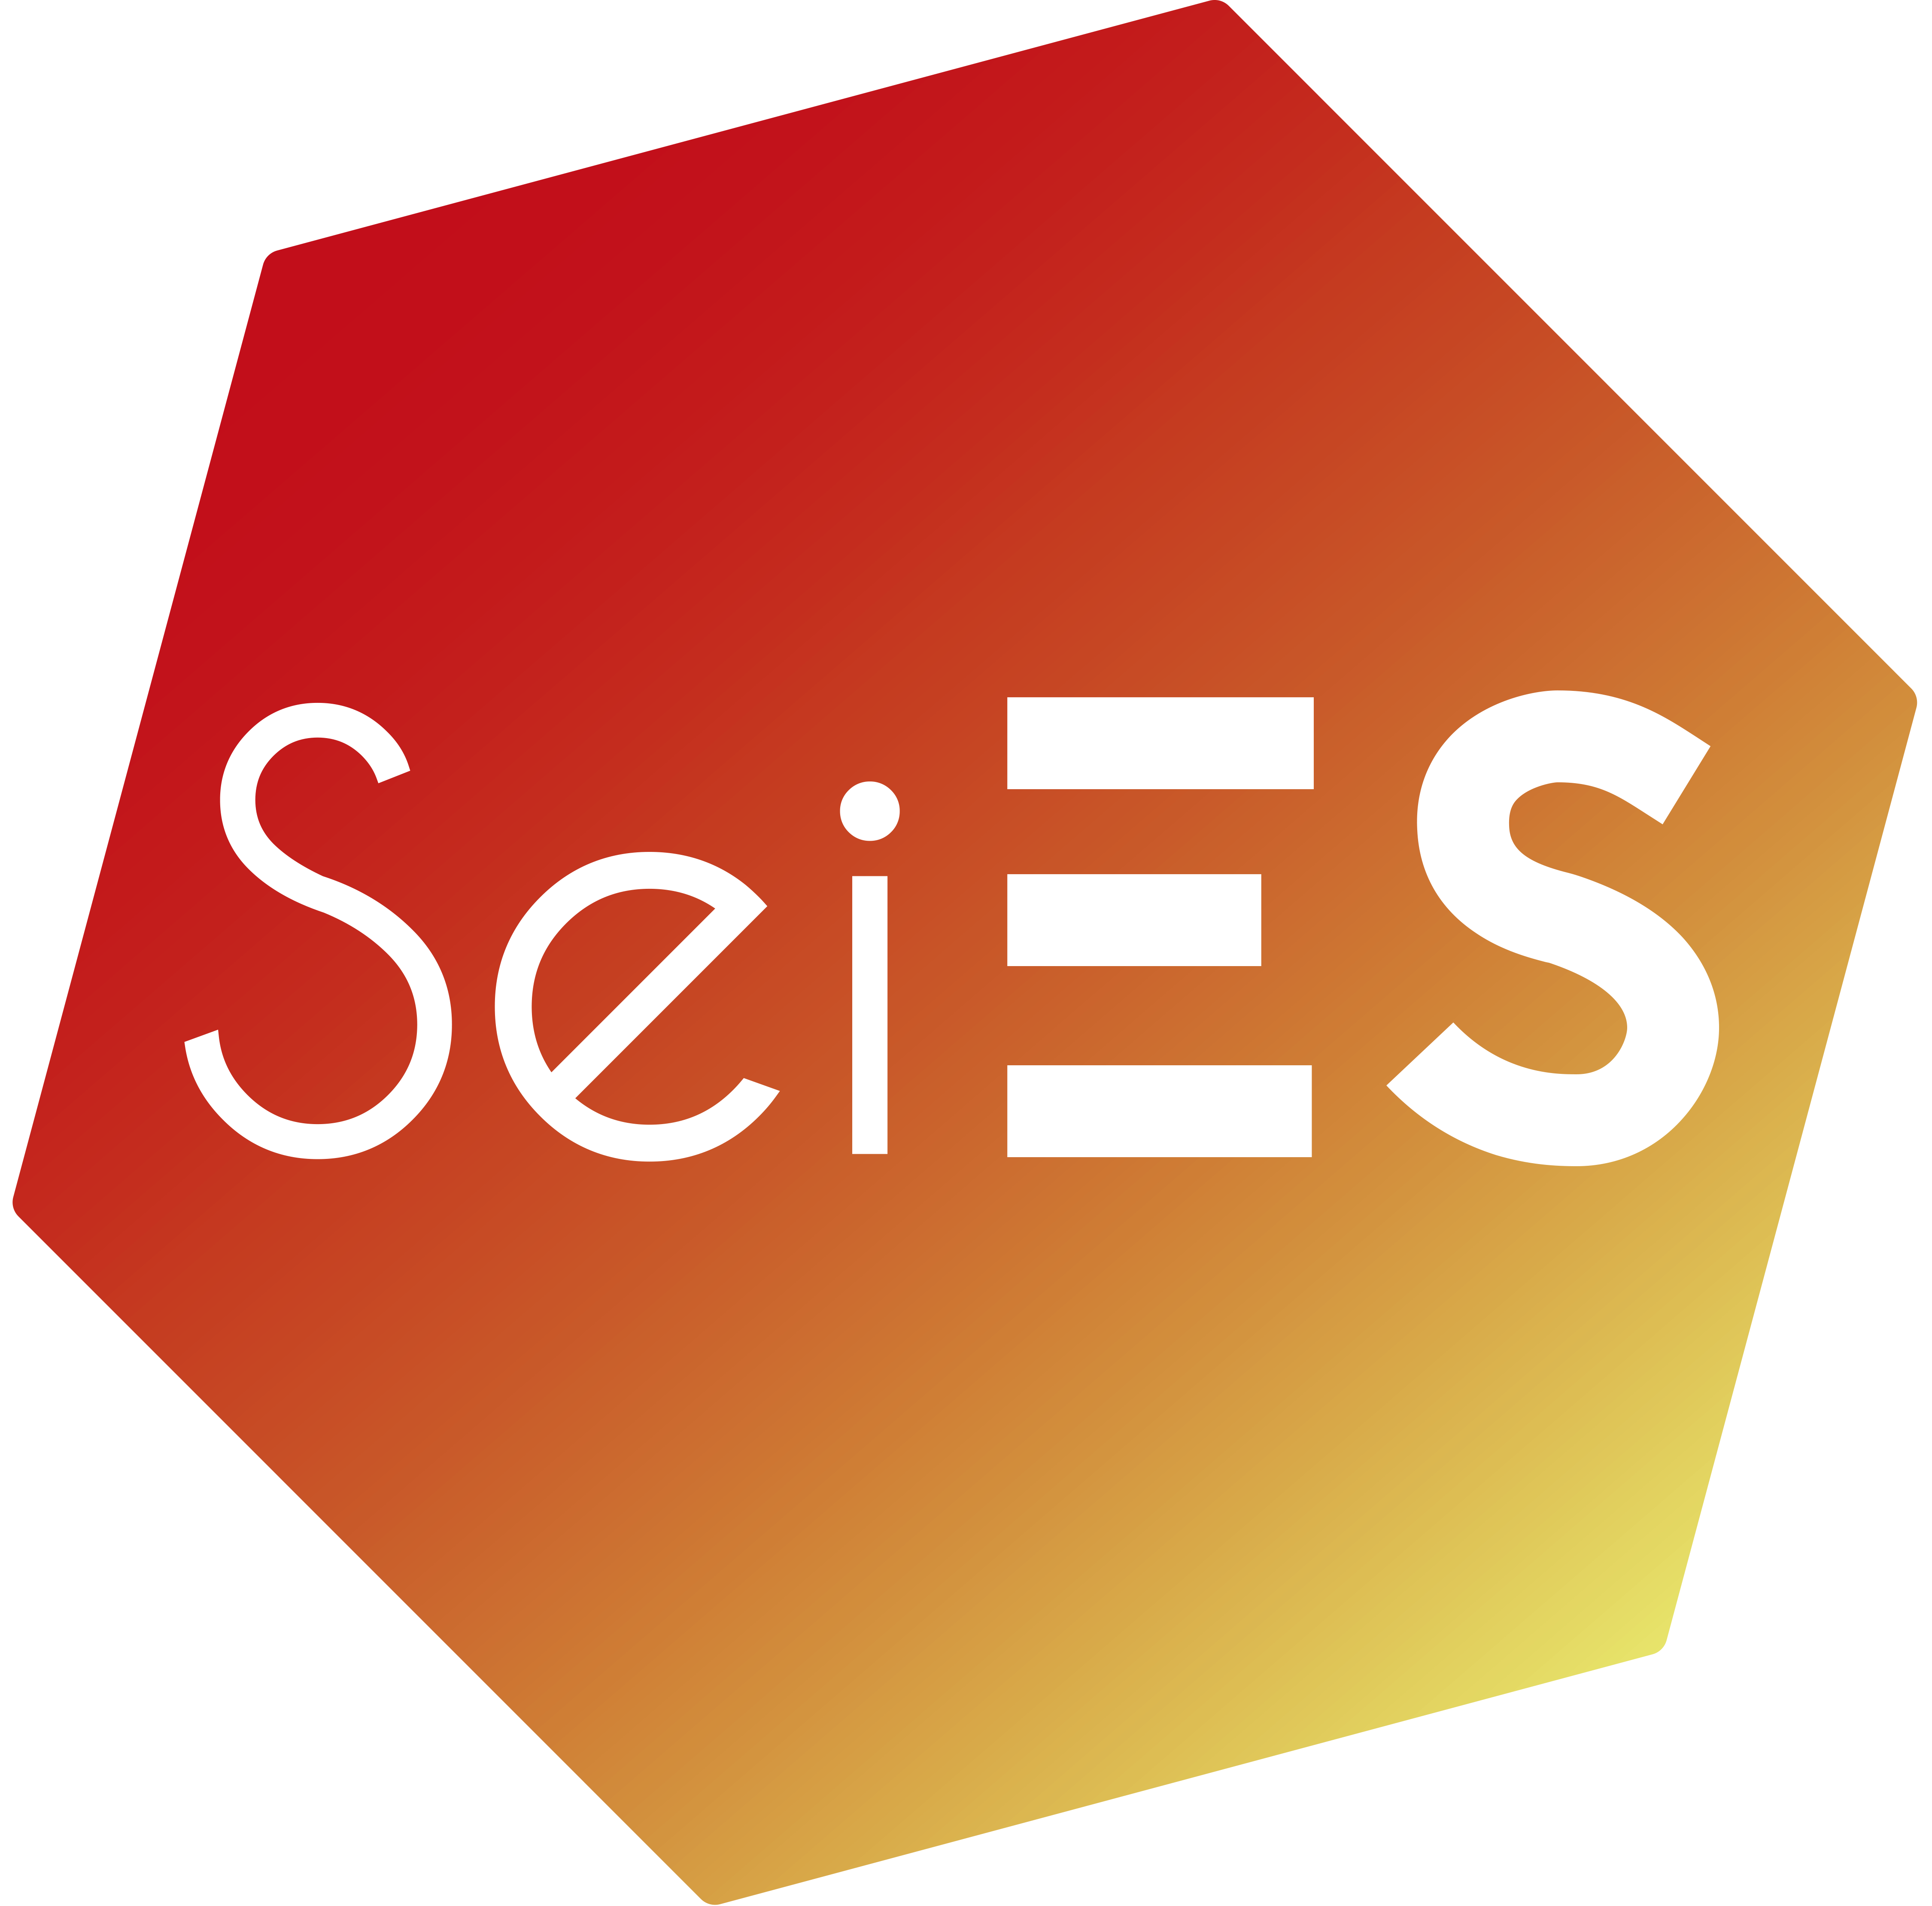 seies-offical-logo-color.png (871 KB)